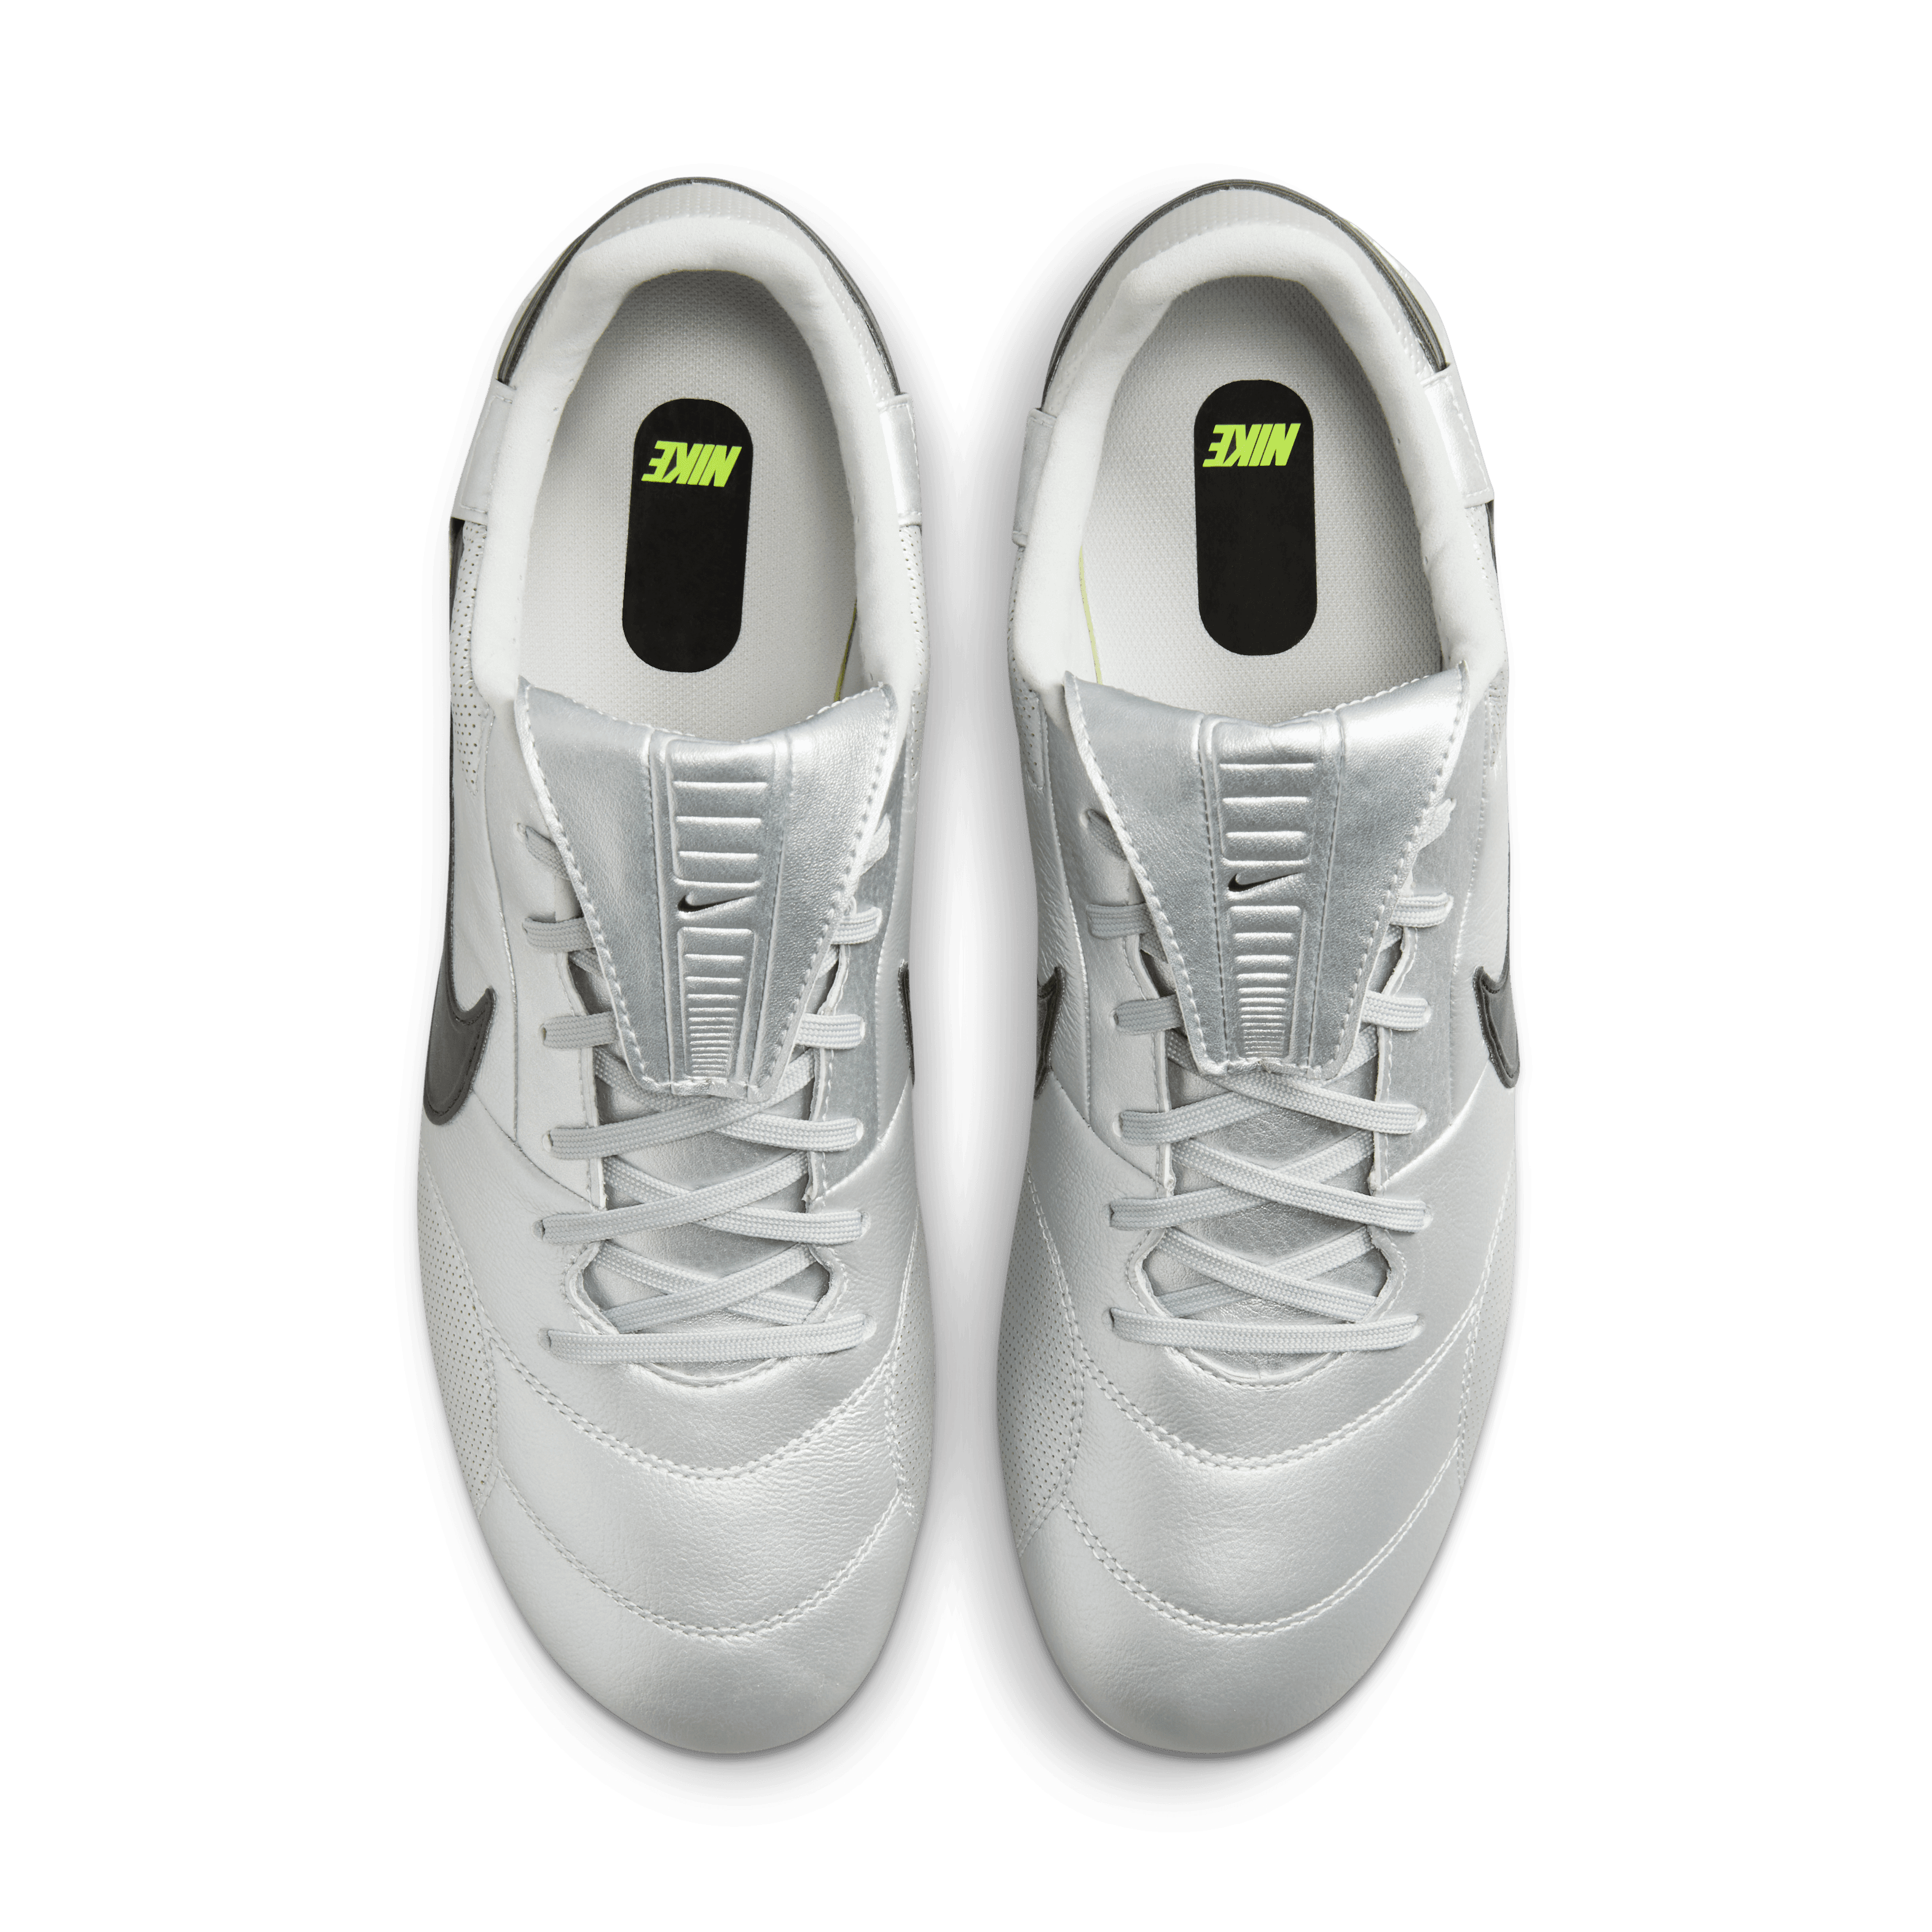 Nike Premier 3 FG-Metallic Silver/Black-Volt